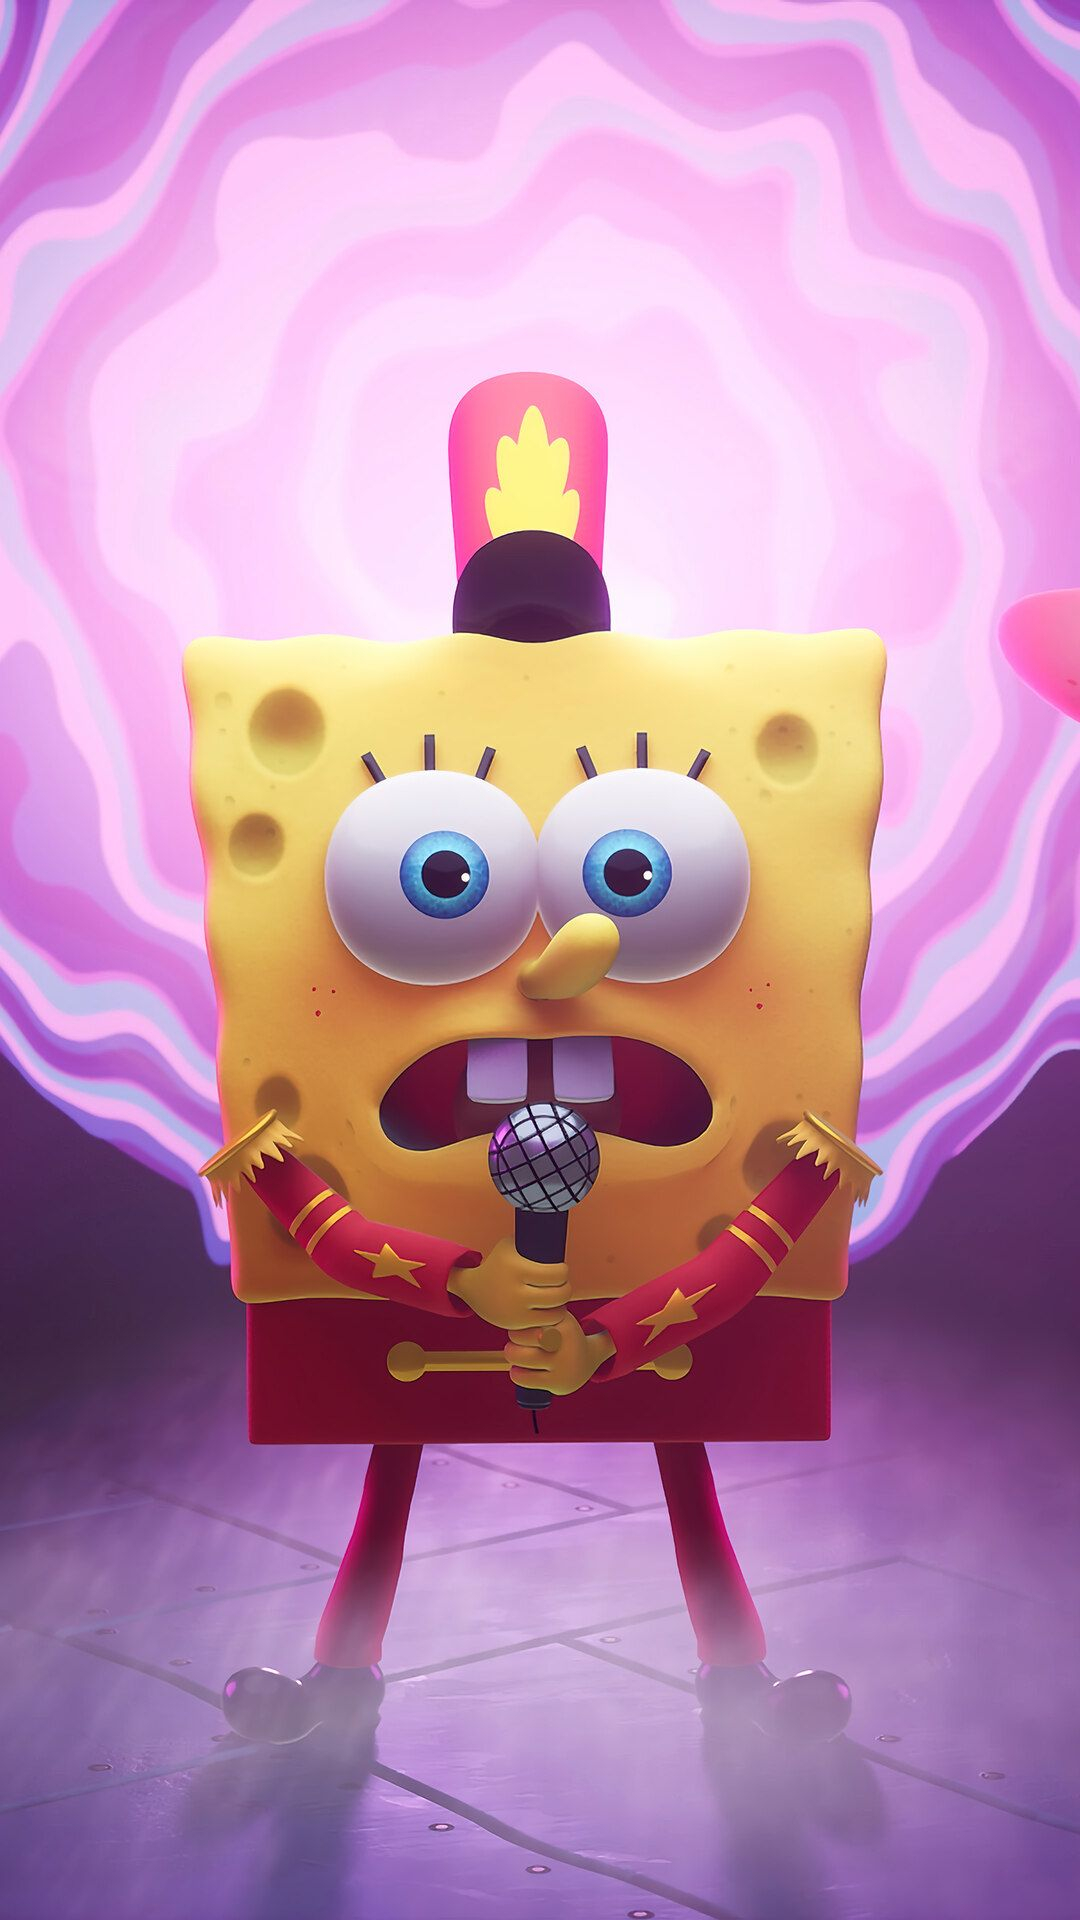 1080x1920 Spongebob Squarepants Wallpapers Top 25 Best Spongebob Squarepants Backgrounds